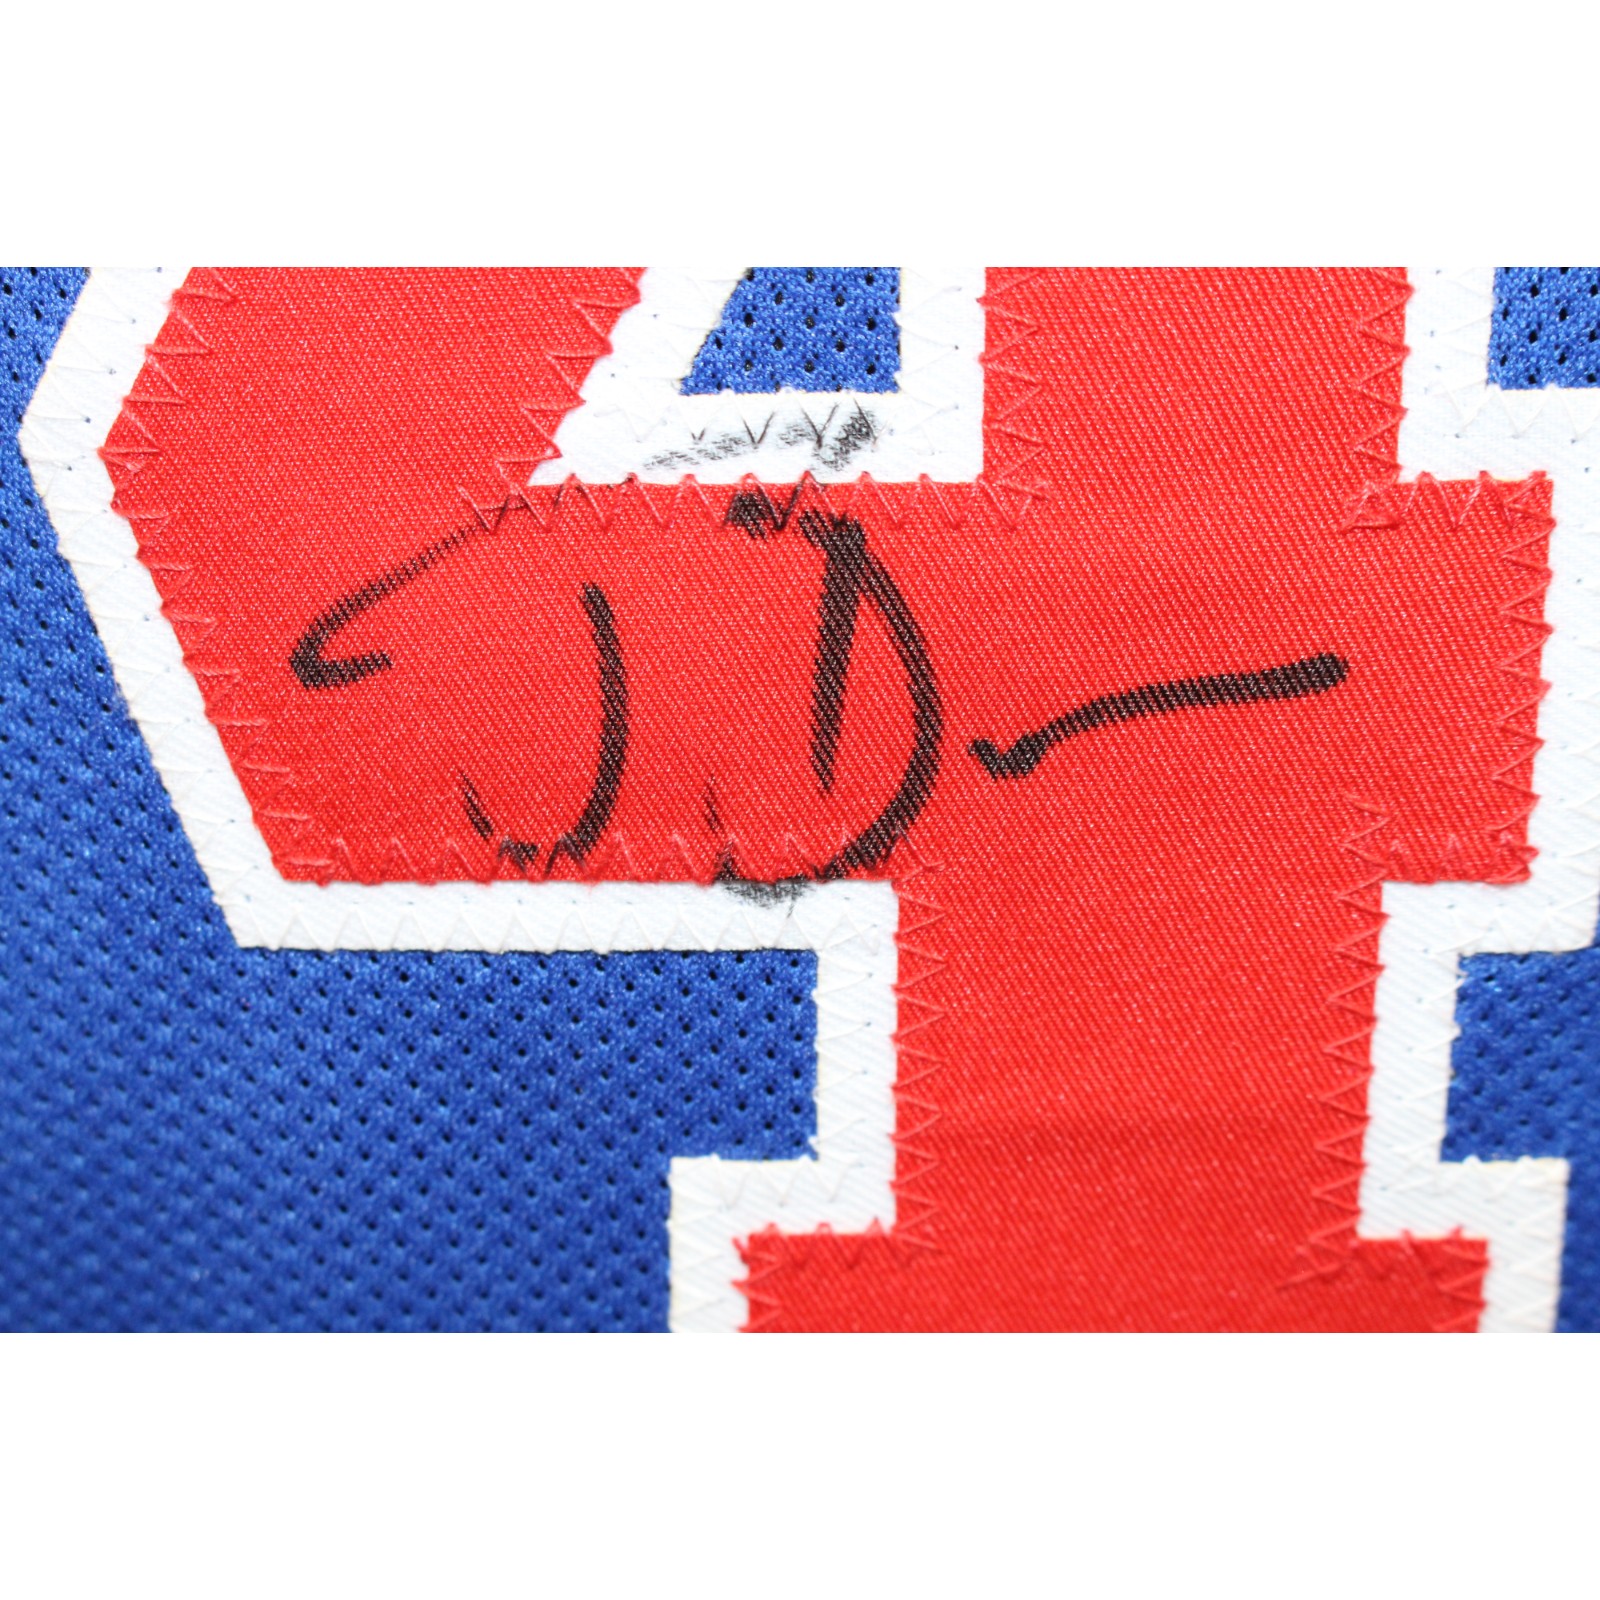 Joe Dumars Autographed/Signed Pro Style Blue Jersey Beckett